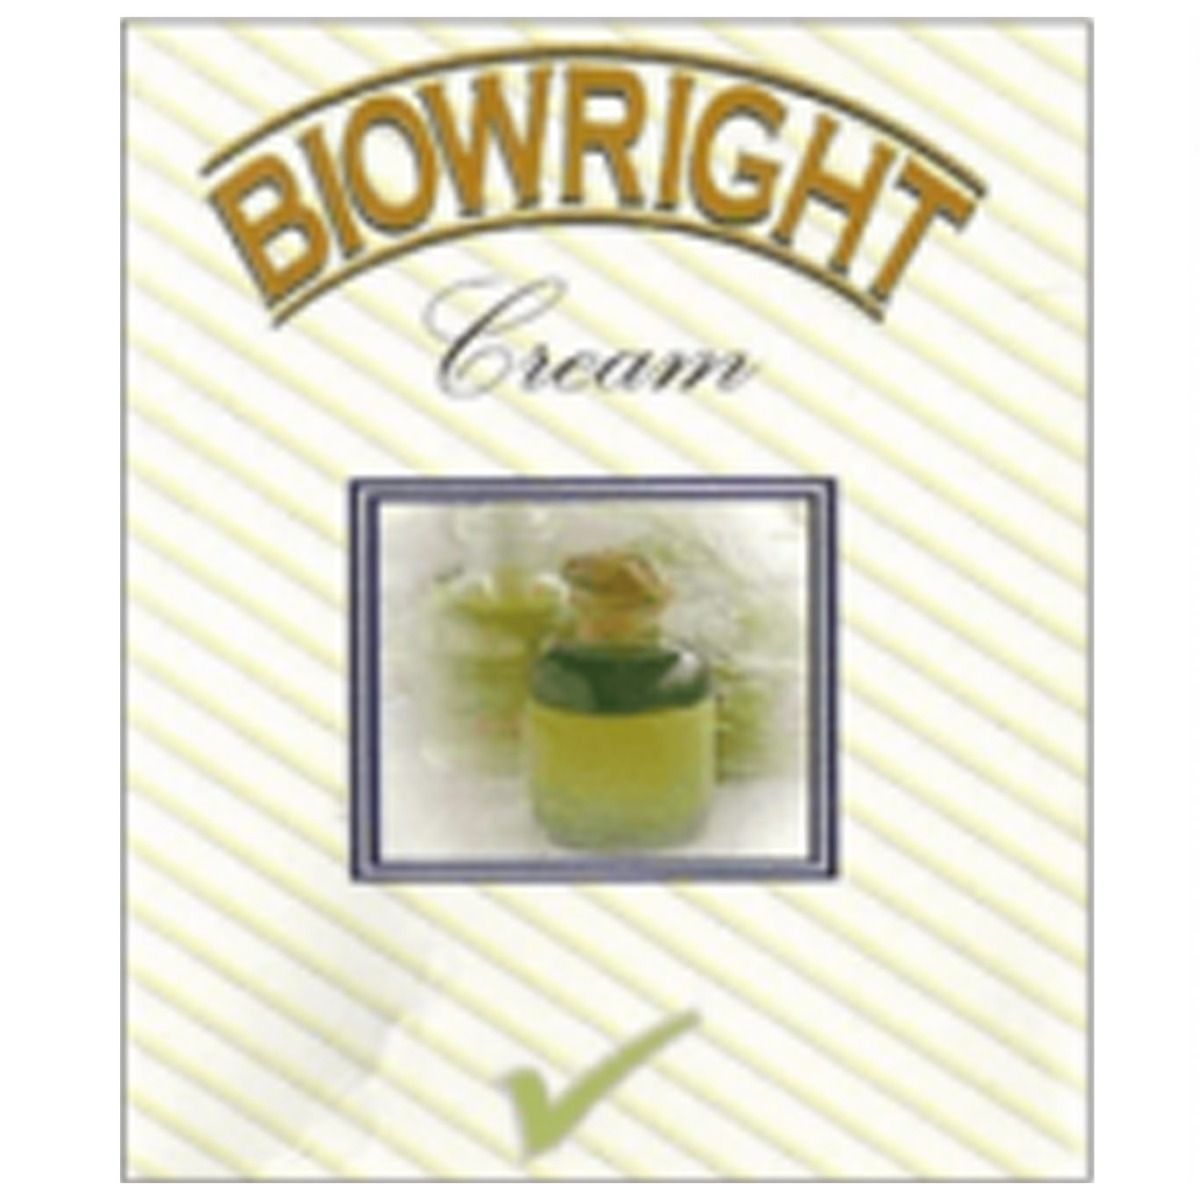 Buy Biowright Cream, 50 gm Online